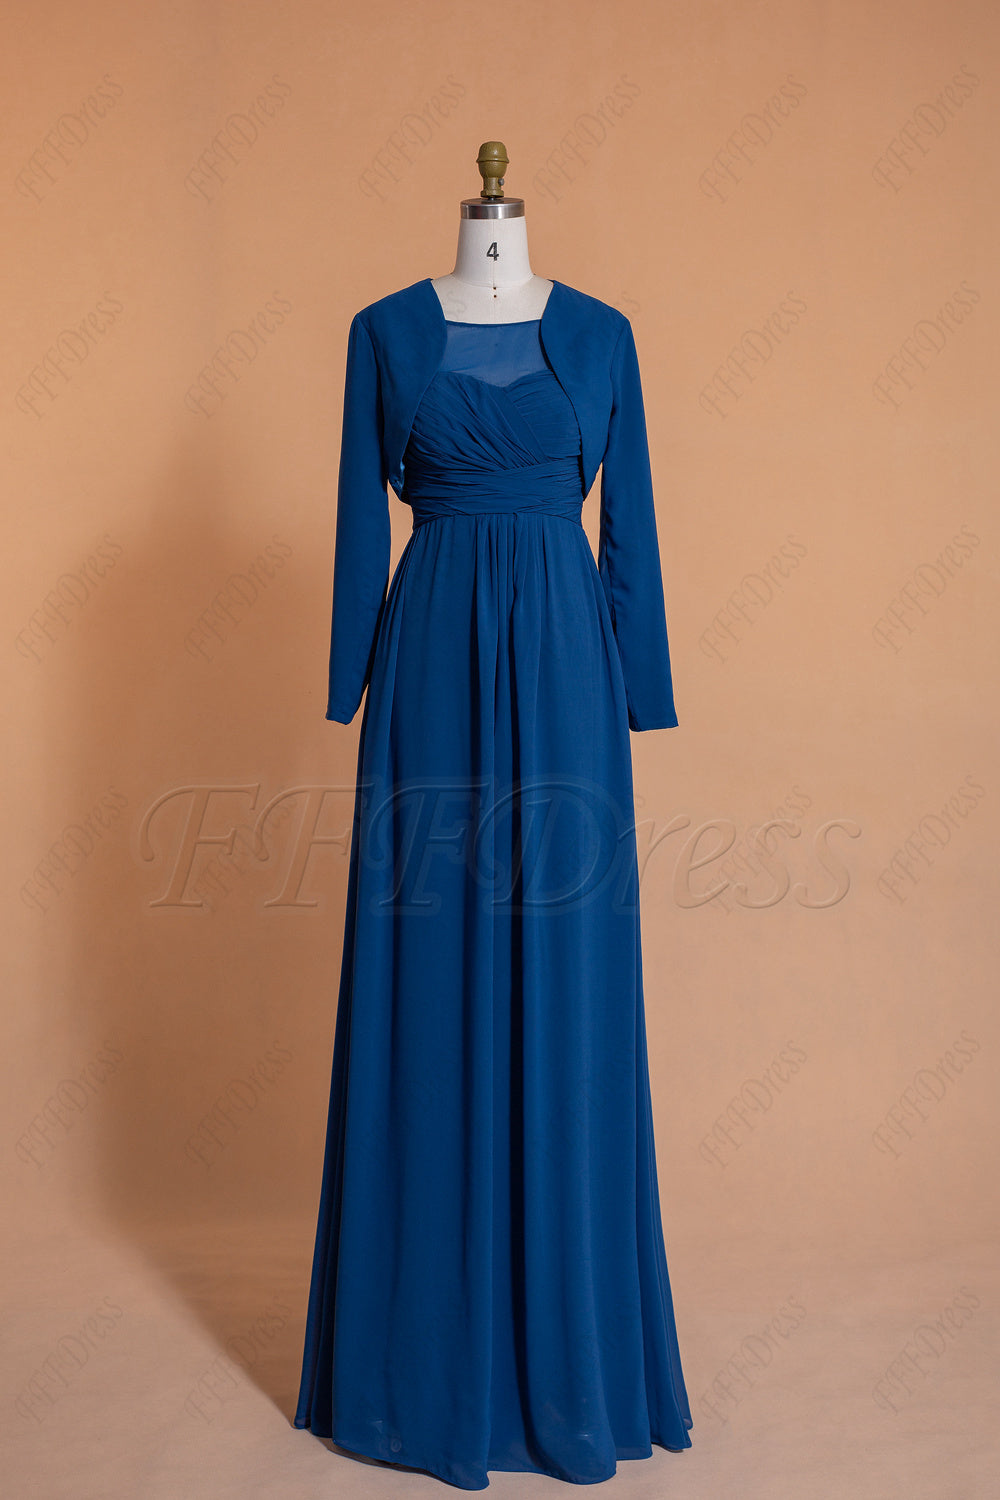 Modest dark teal bridesmaid dresses with long sleeves bolero